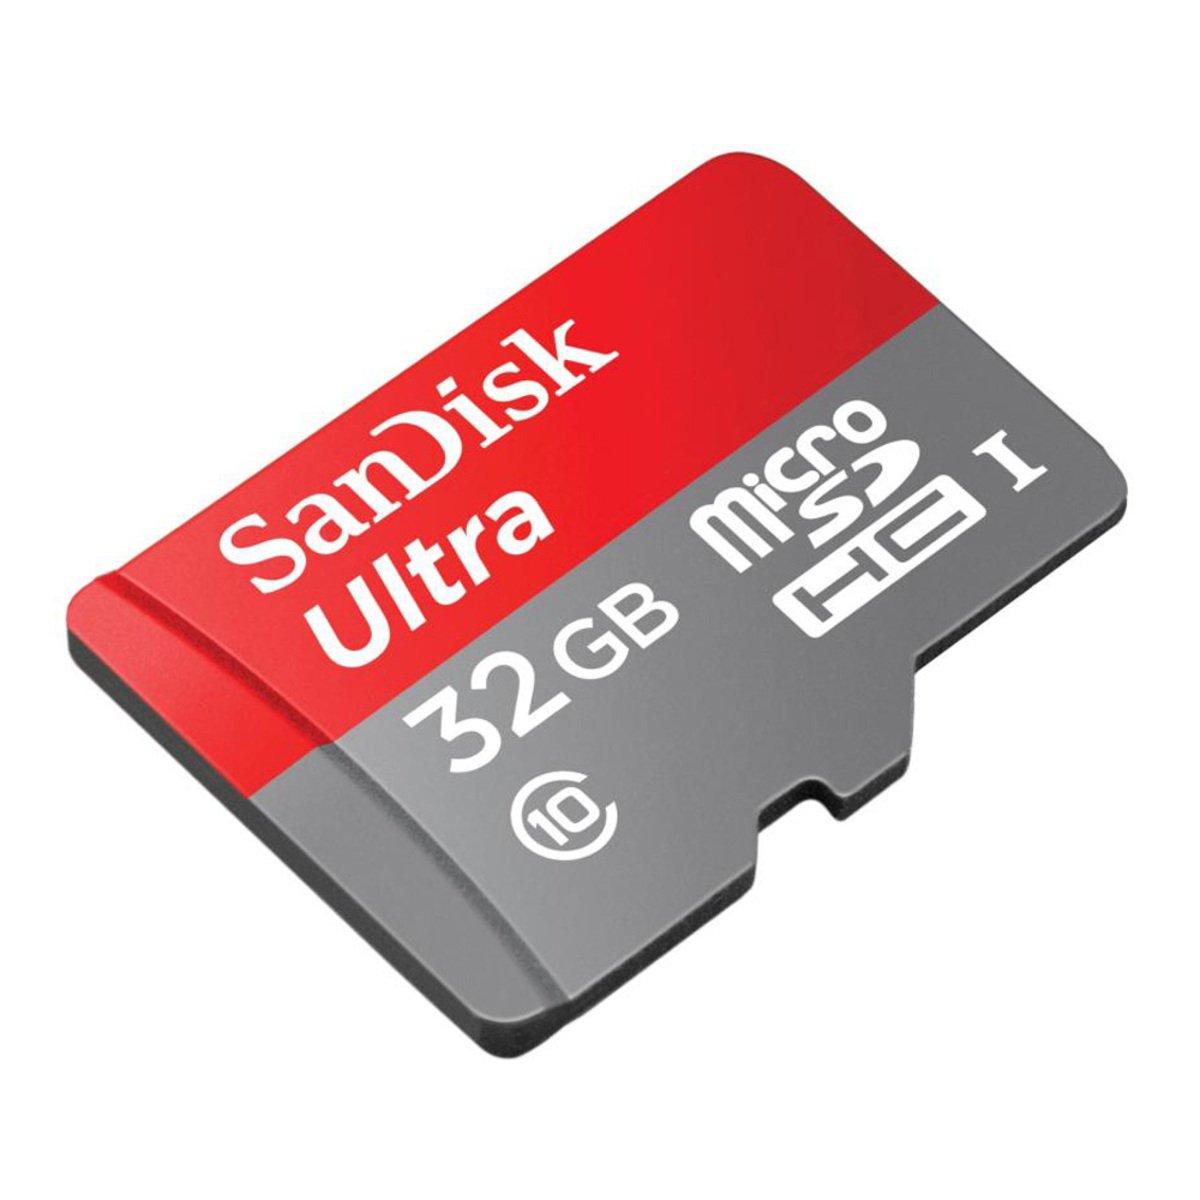 Sandisk MicroSDHC AndroidUHS1 32GB